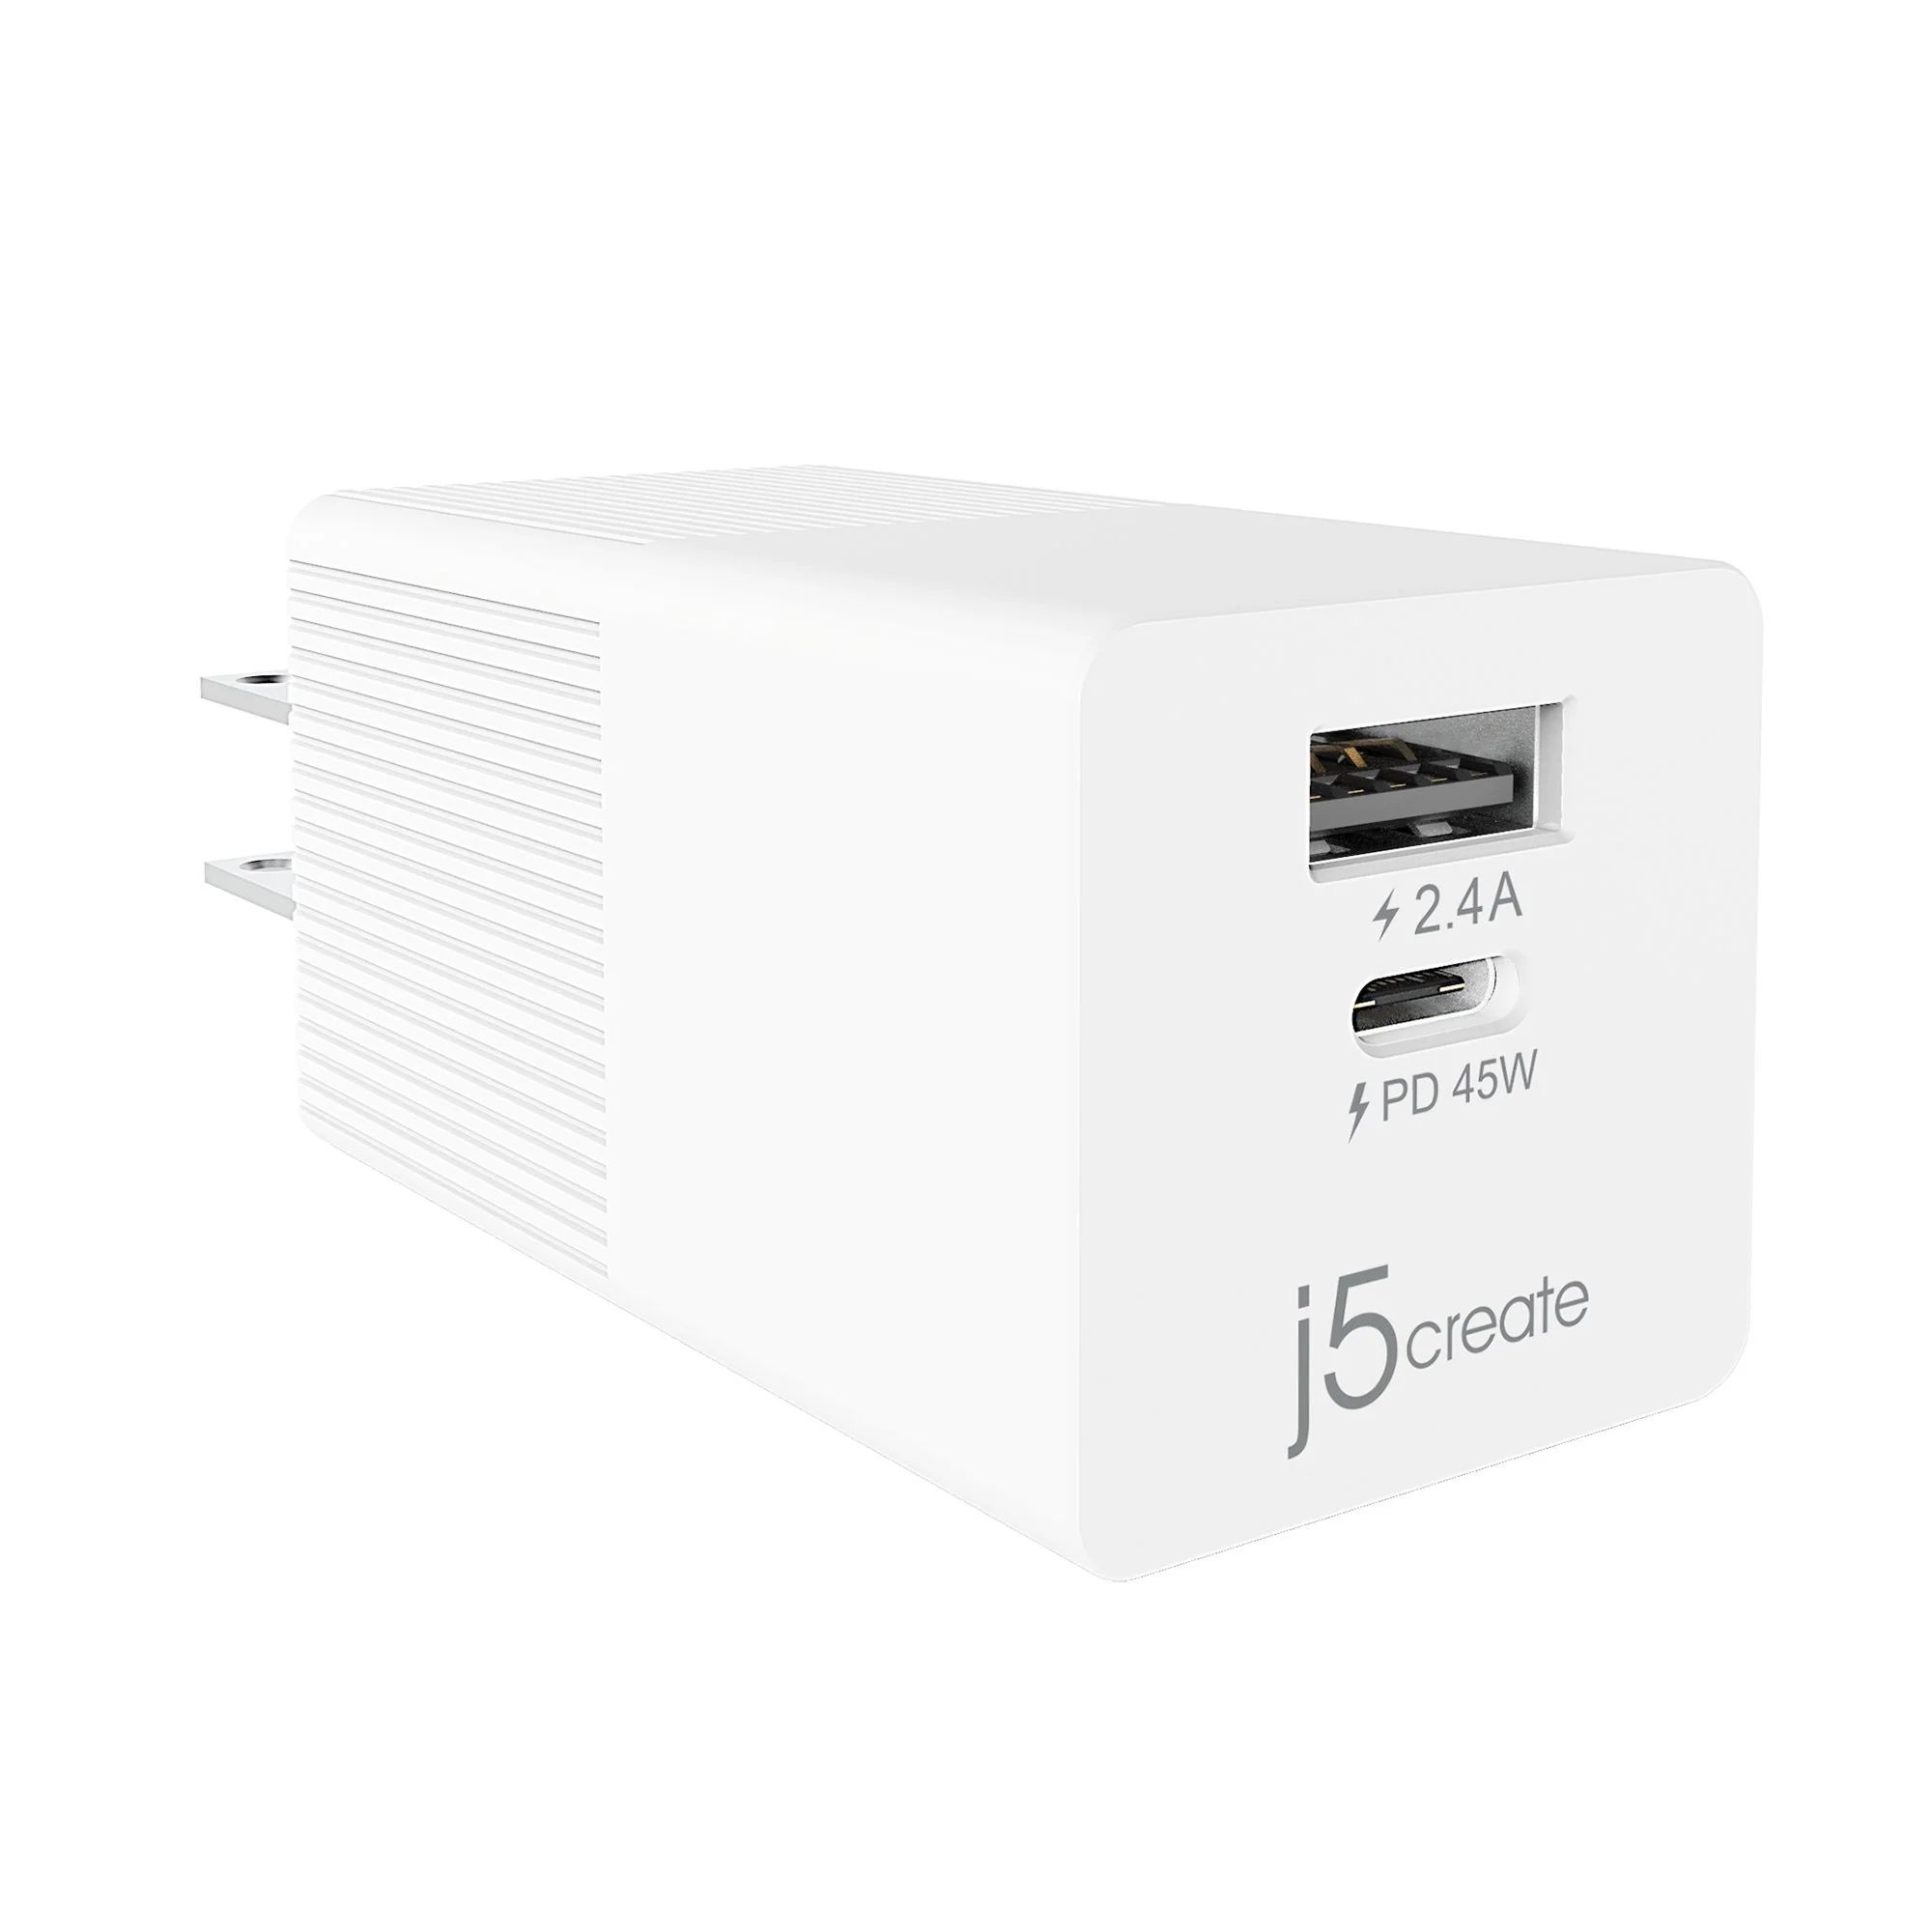 Сетевое зарядное устройство j5create 45W JUP2445 сетевое зарядное устройство j5create 100w pd usb c super charger